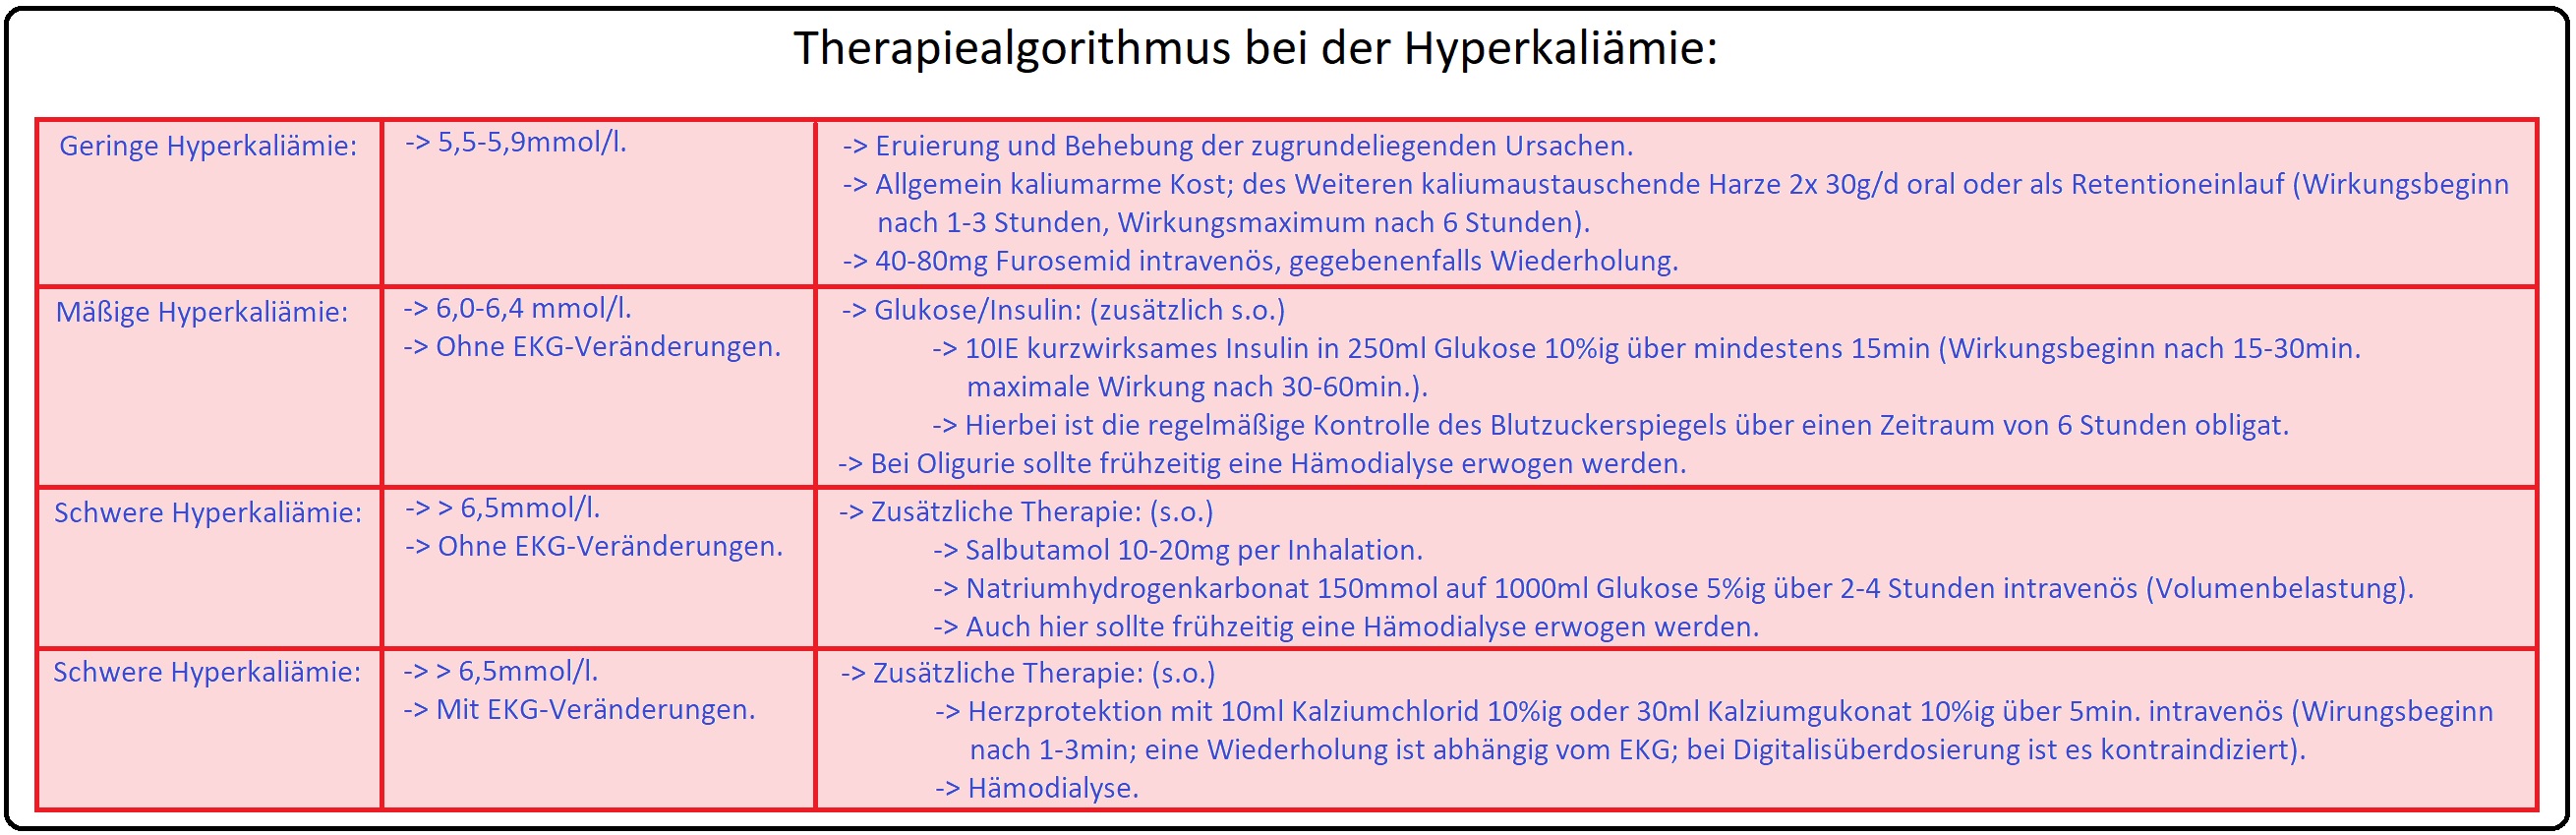 950 Therapiealgorithmus bei der Hyperkaliämie